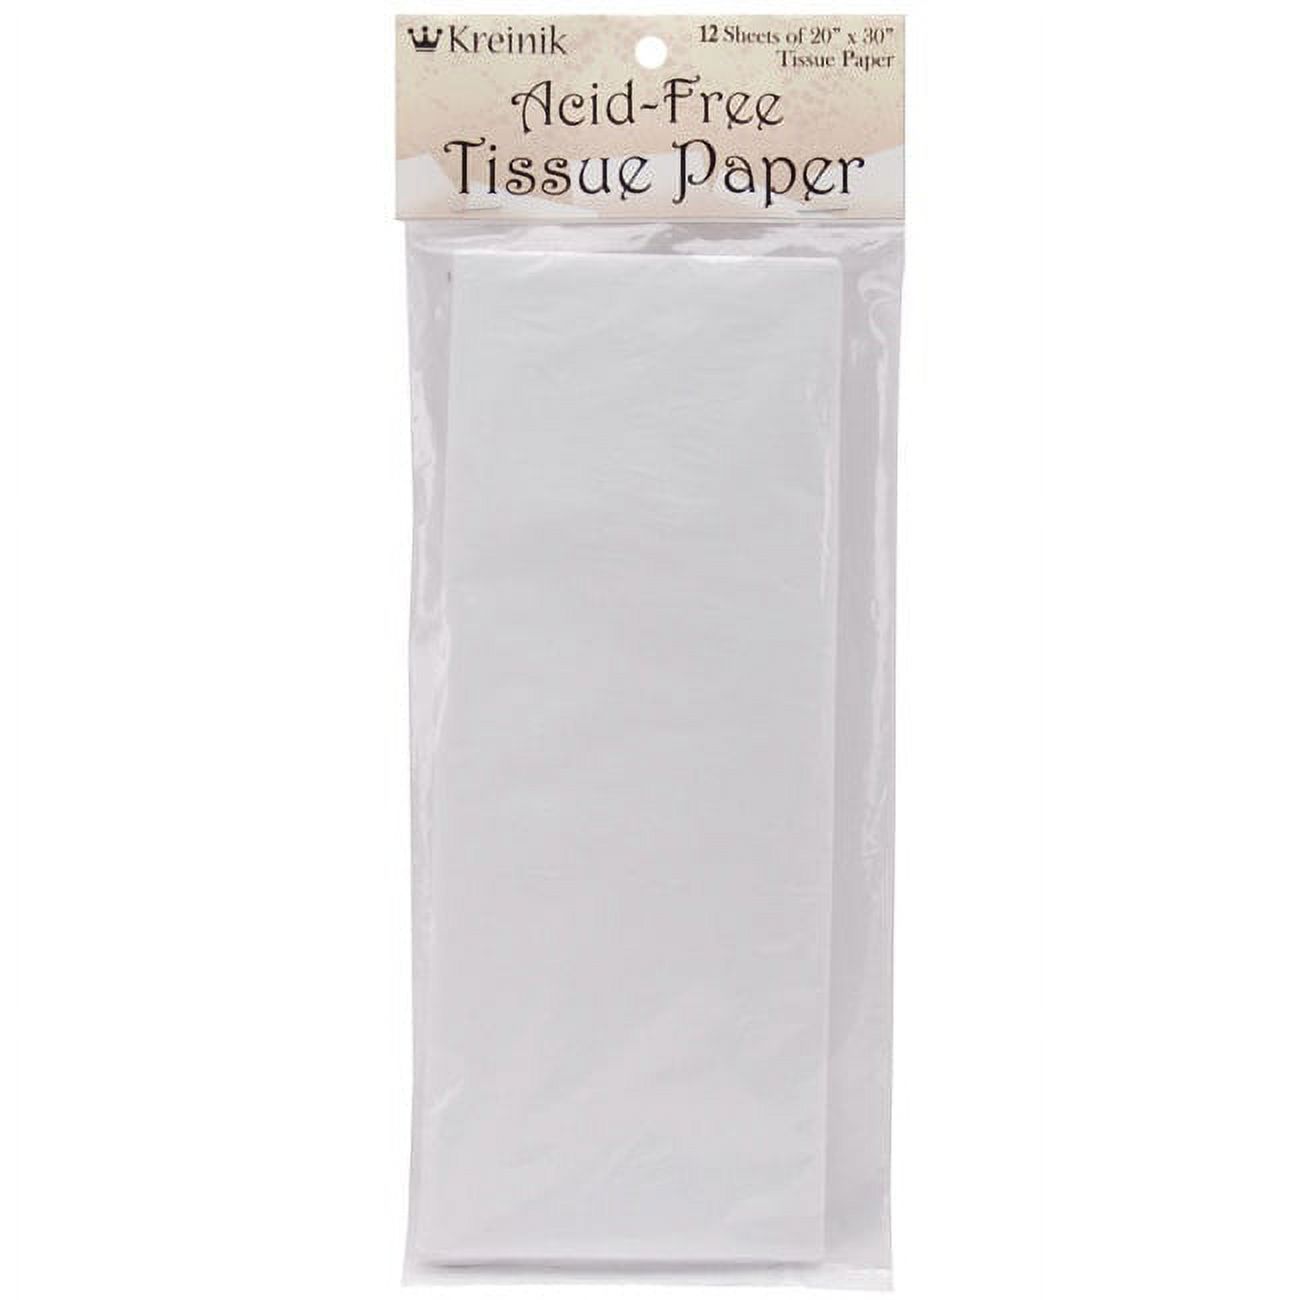 Kreinik Acid Free Tissue Paper, 20" x 30", 12/pkg - image 3 of 3